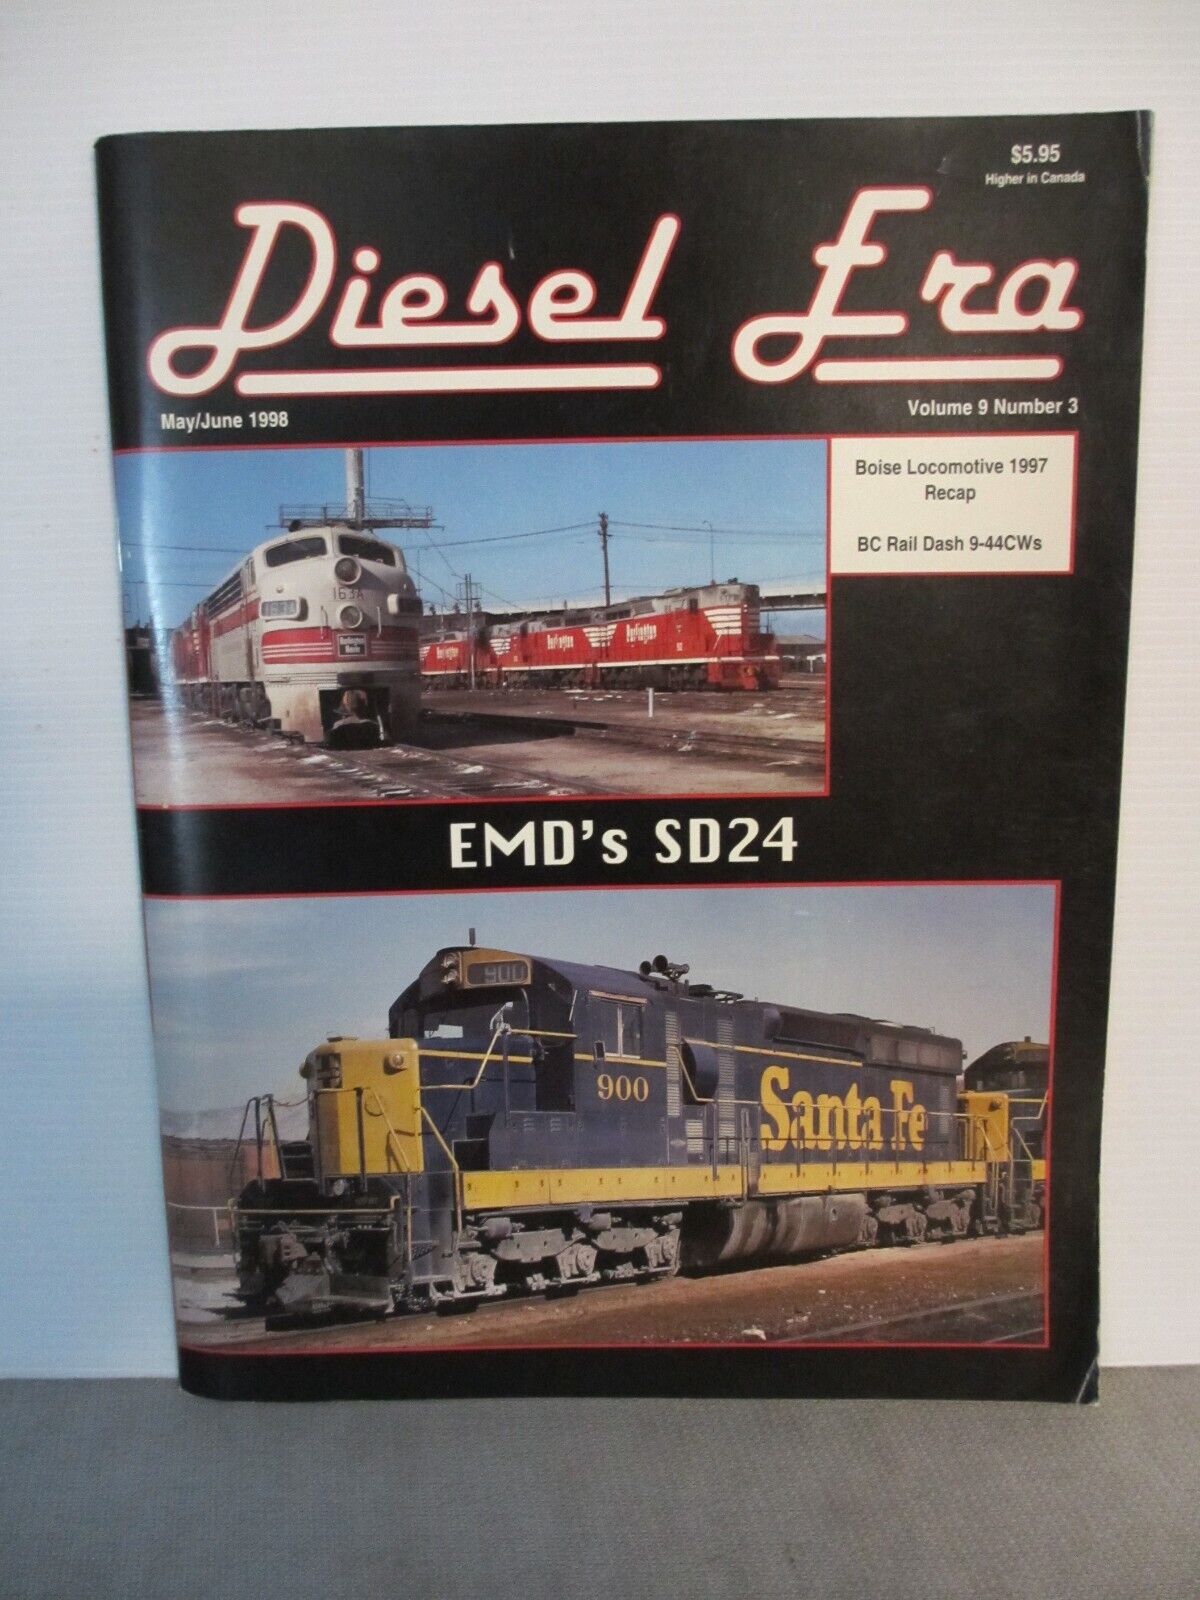 DIESEL ERA MAGAZINE May June 1998 Vol. 9 # 3 Boise Loco 1997 BC Rail EMD SD24